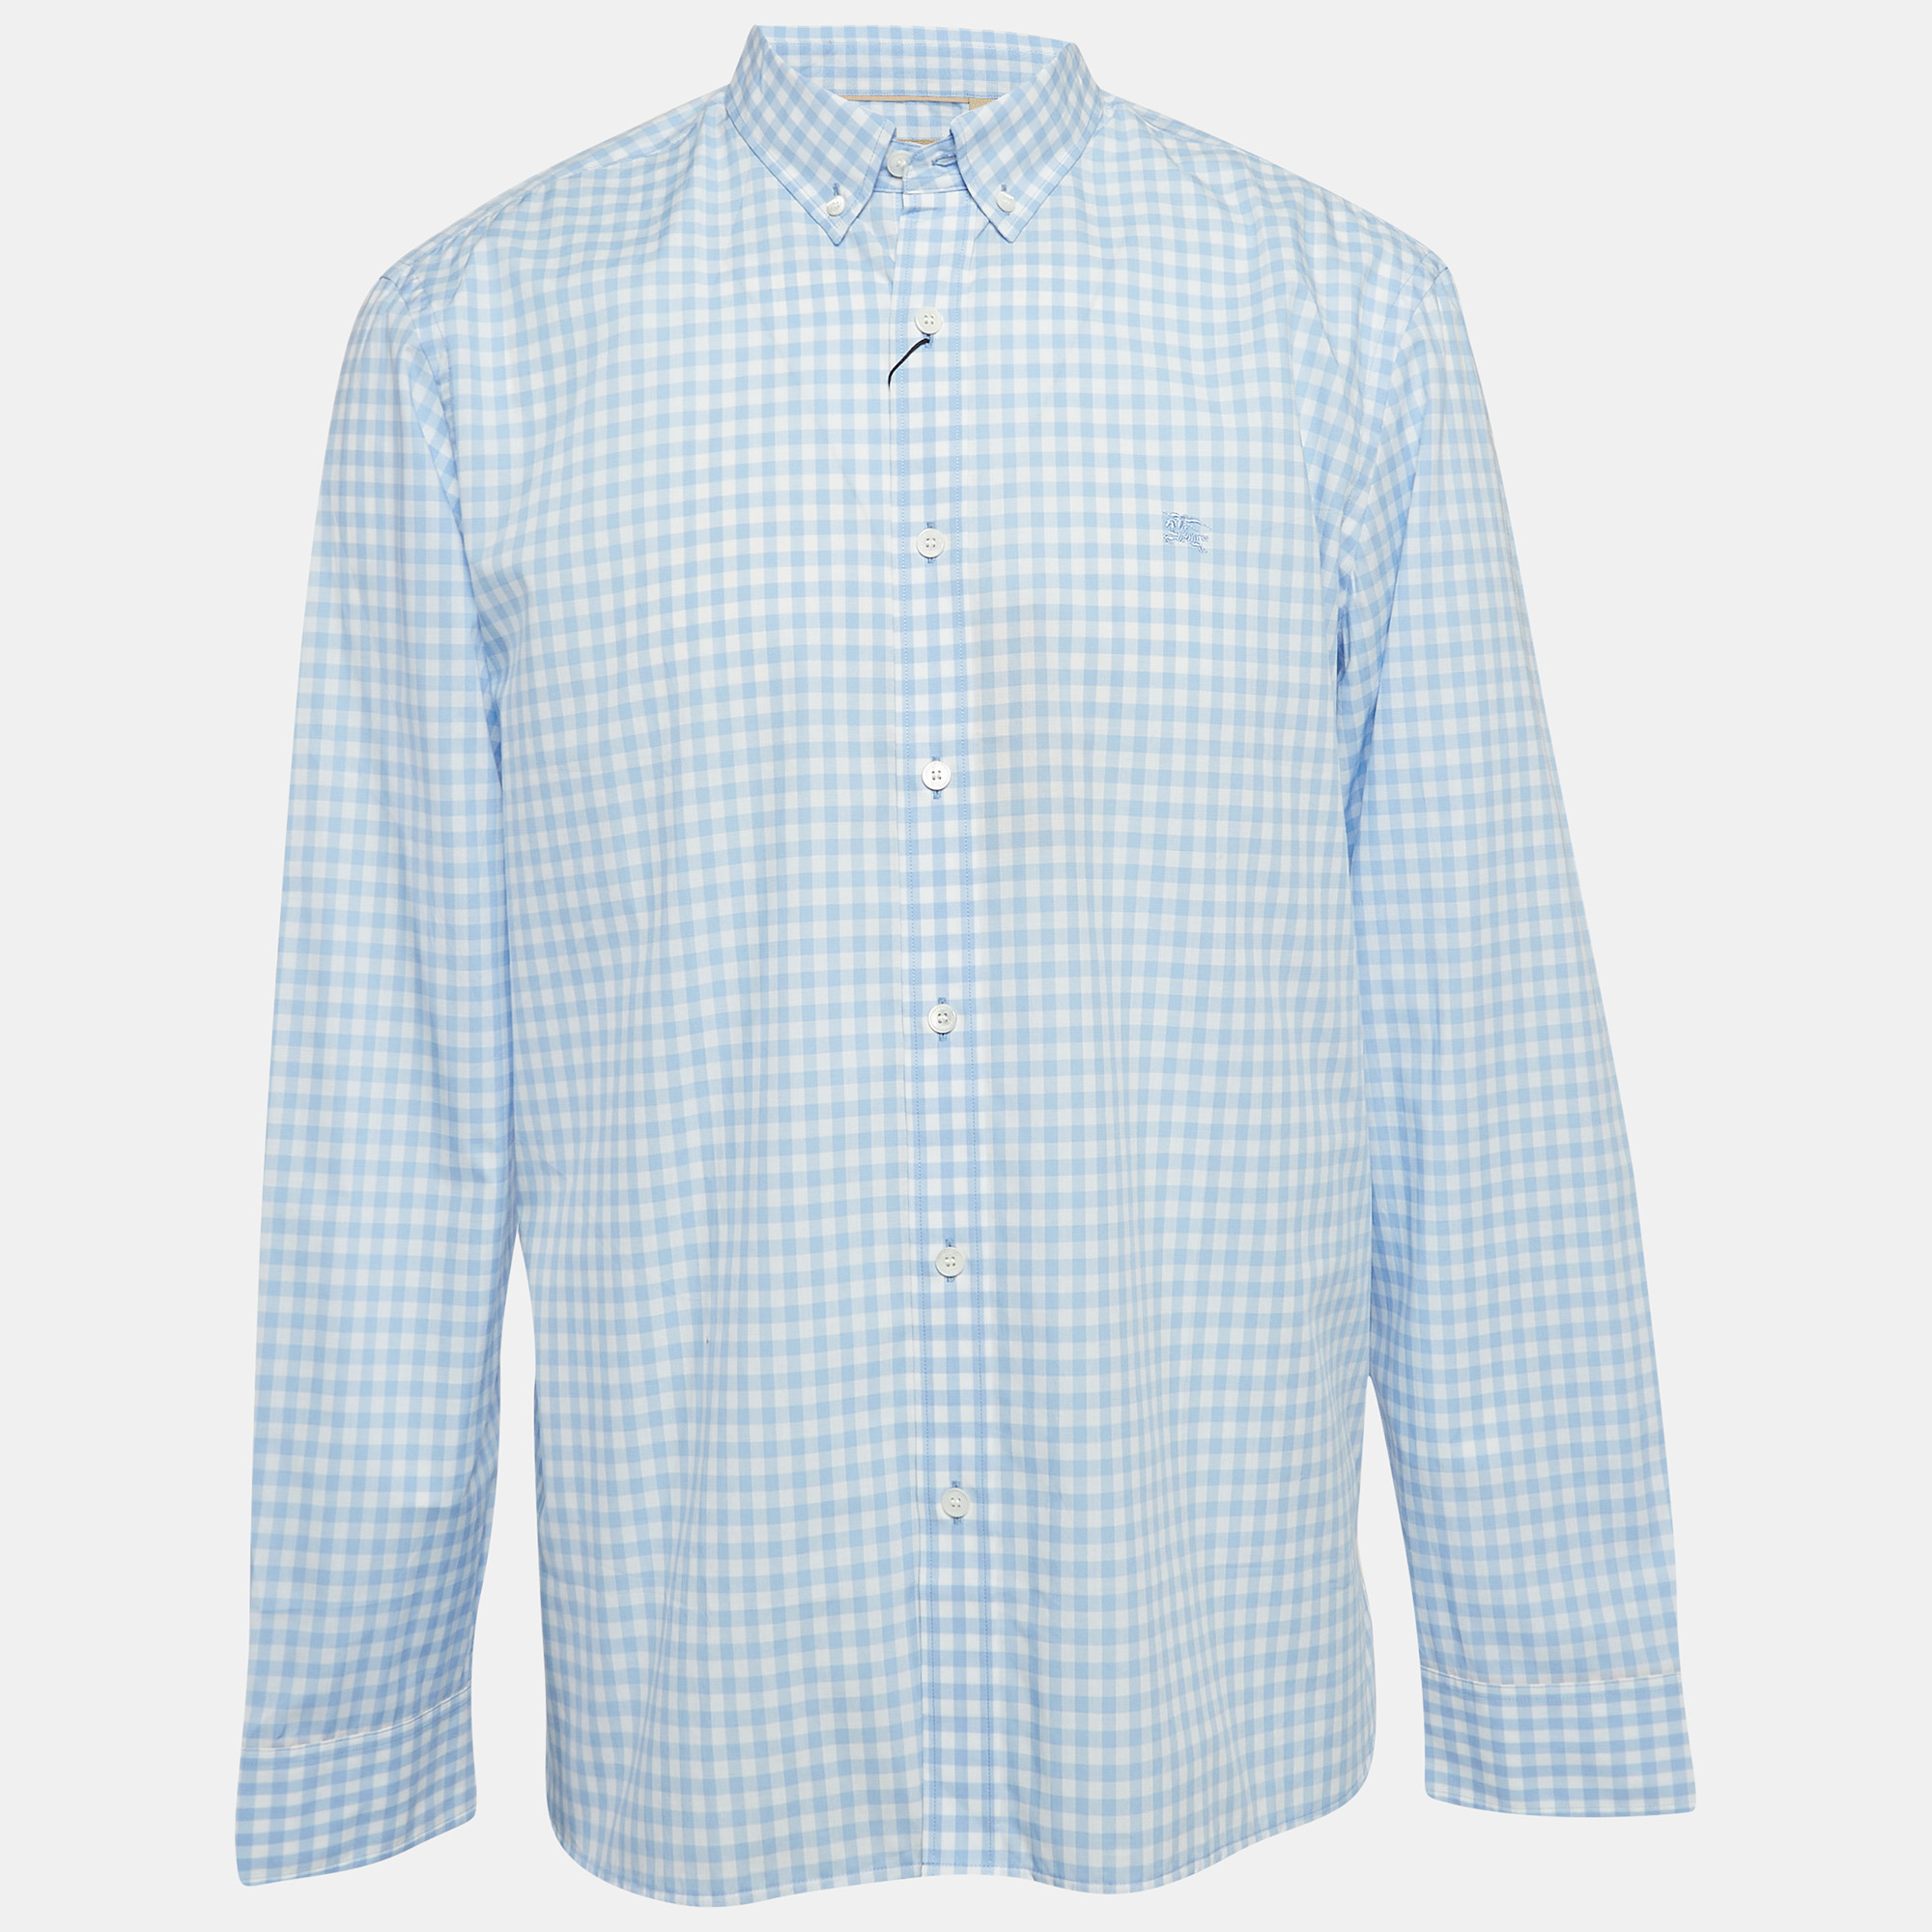 Burberry london blue checked cotton long sleeve shirt xxl